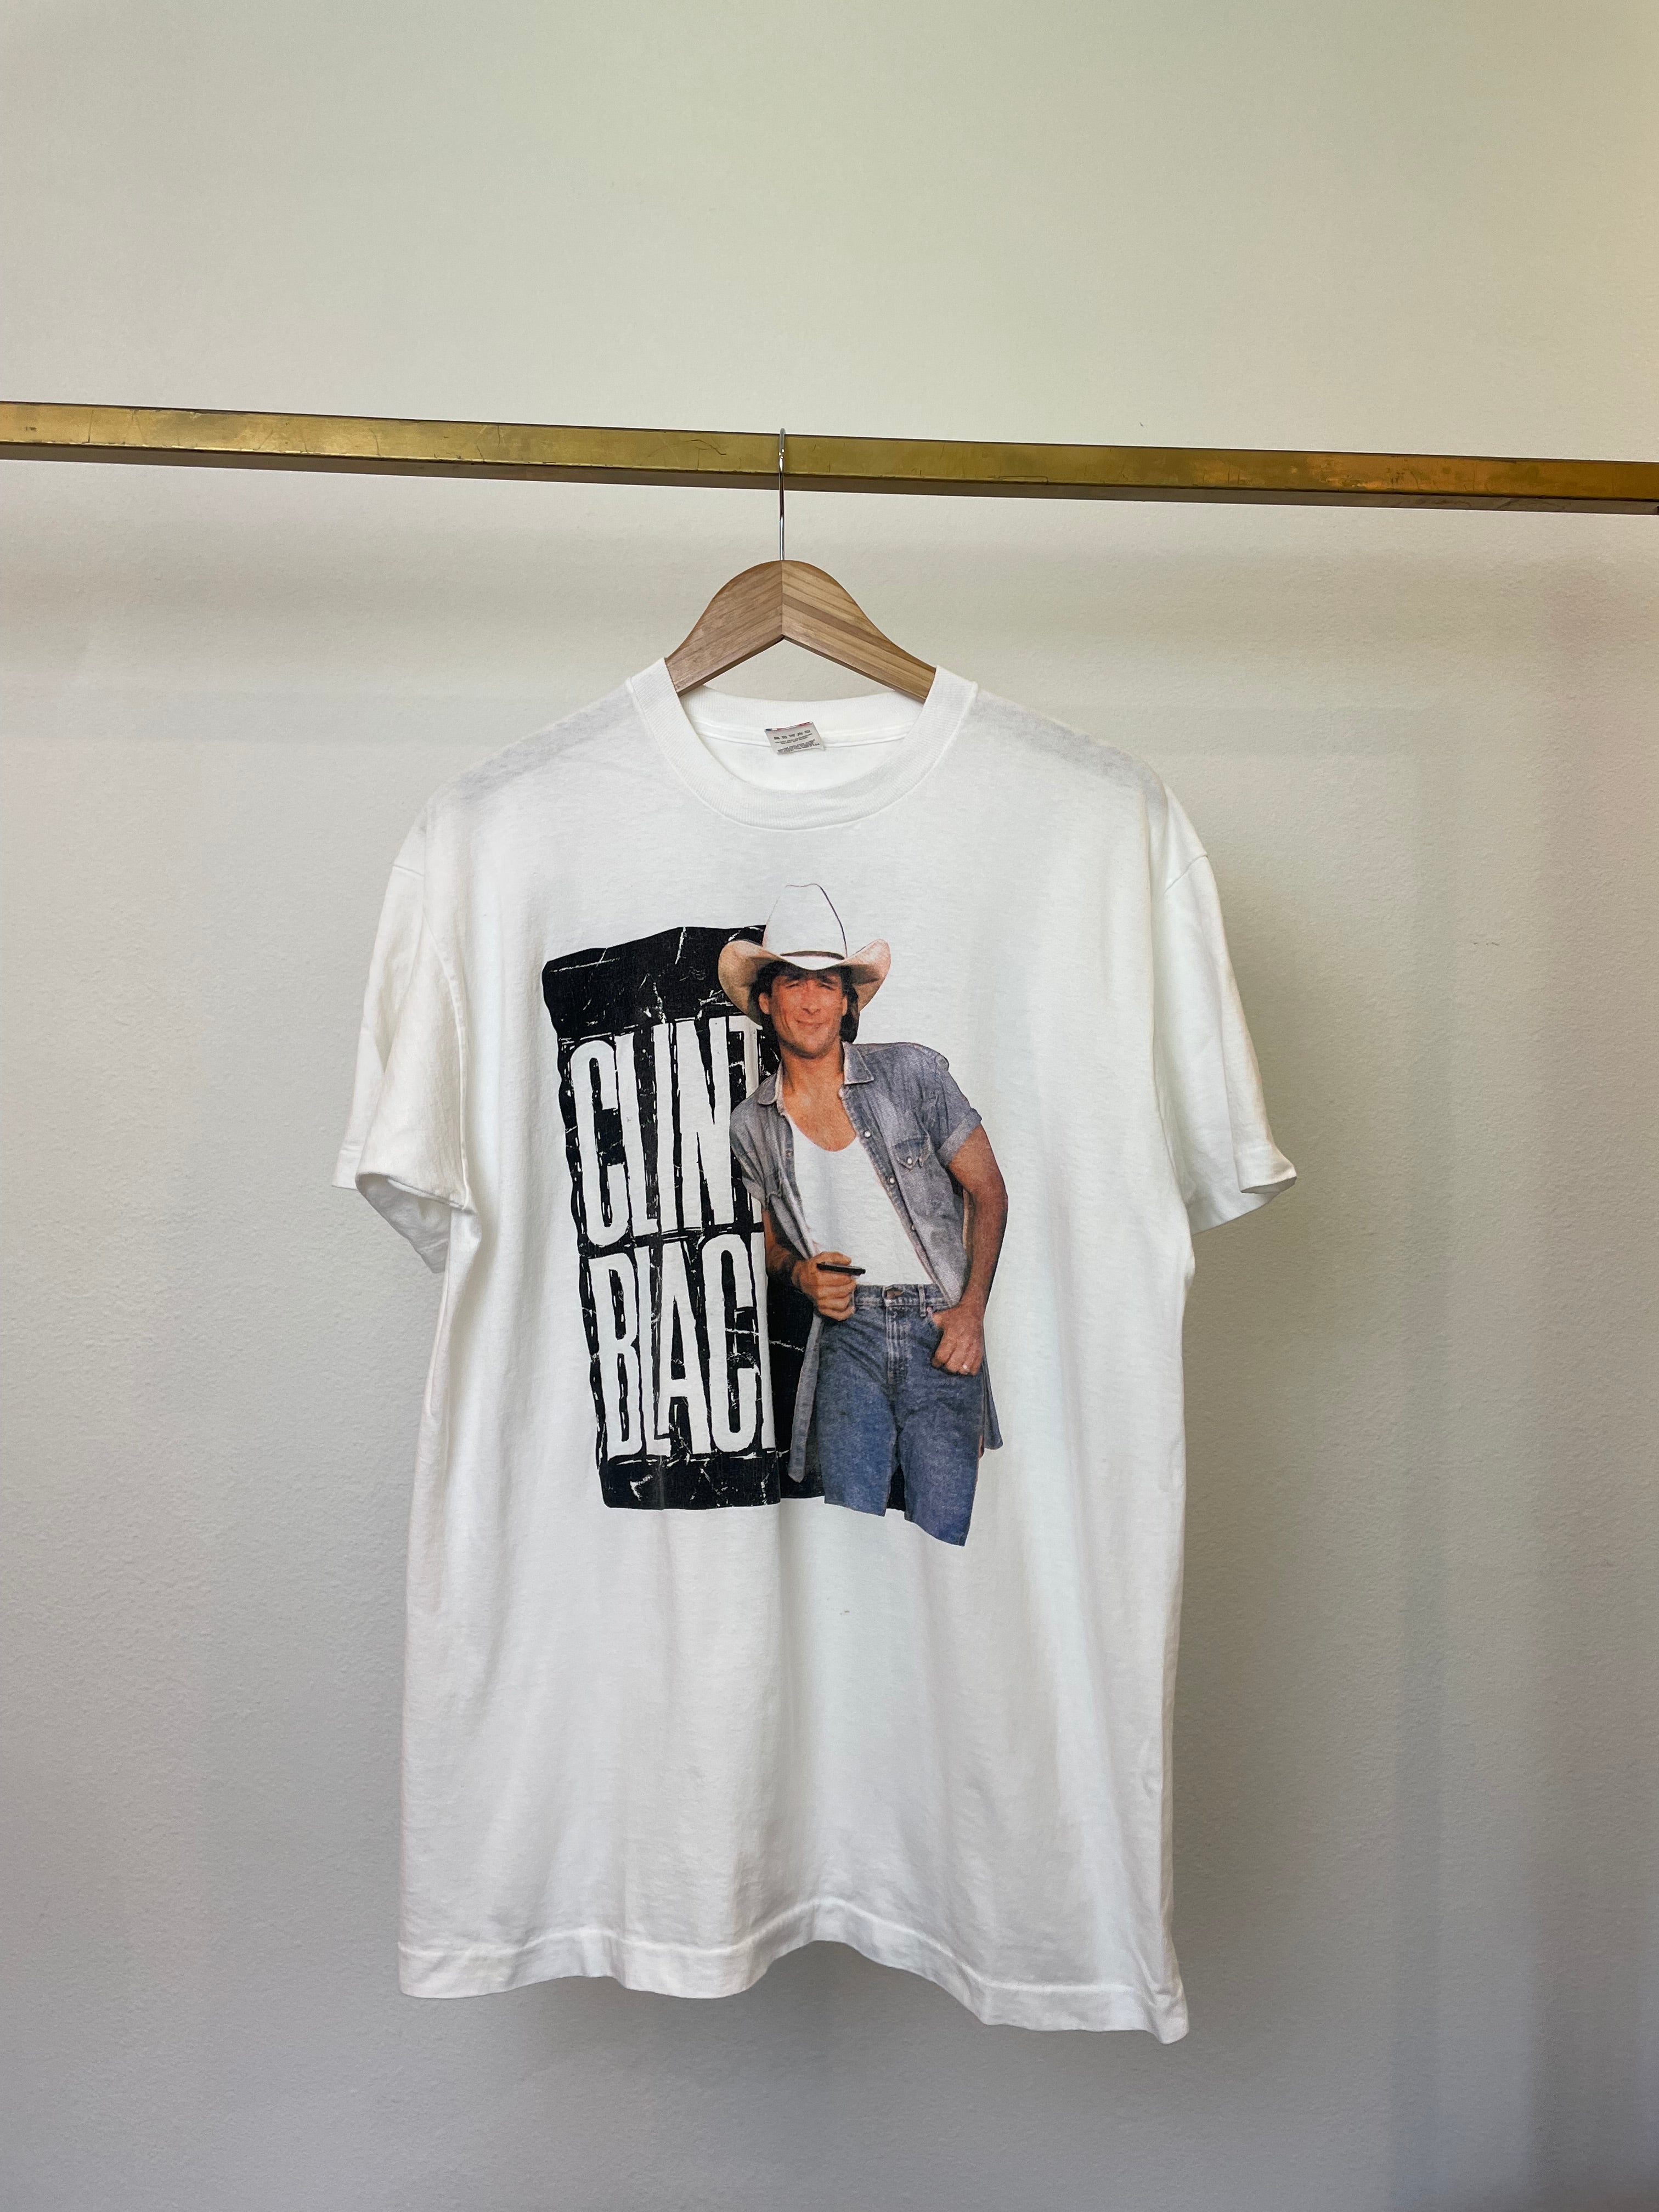 1992 Clint Black The Hard Way Tour Tee (XL)